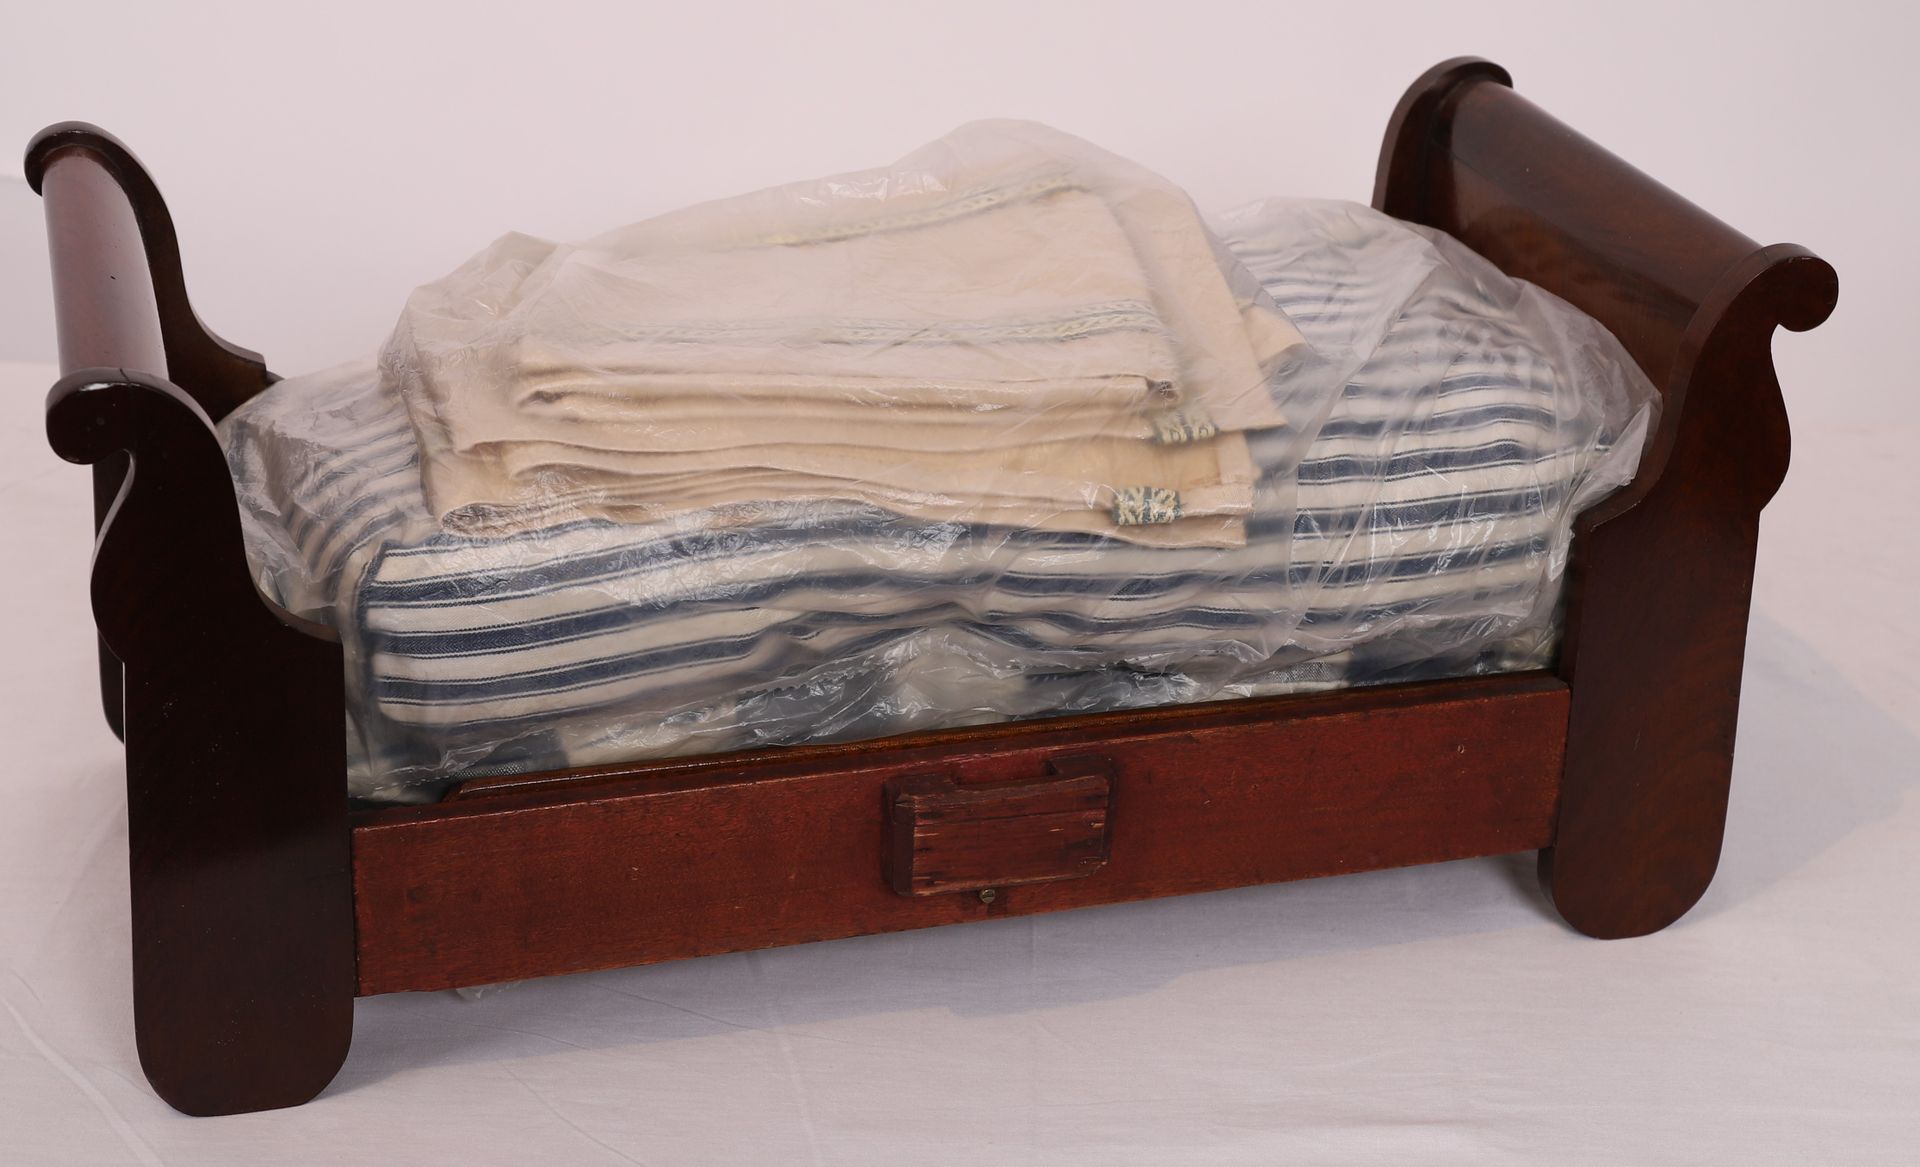 Null 19世纪带床垫的娃娃床

22,5 x 50 x 22 厘米

使用和维护的条件